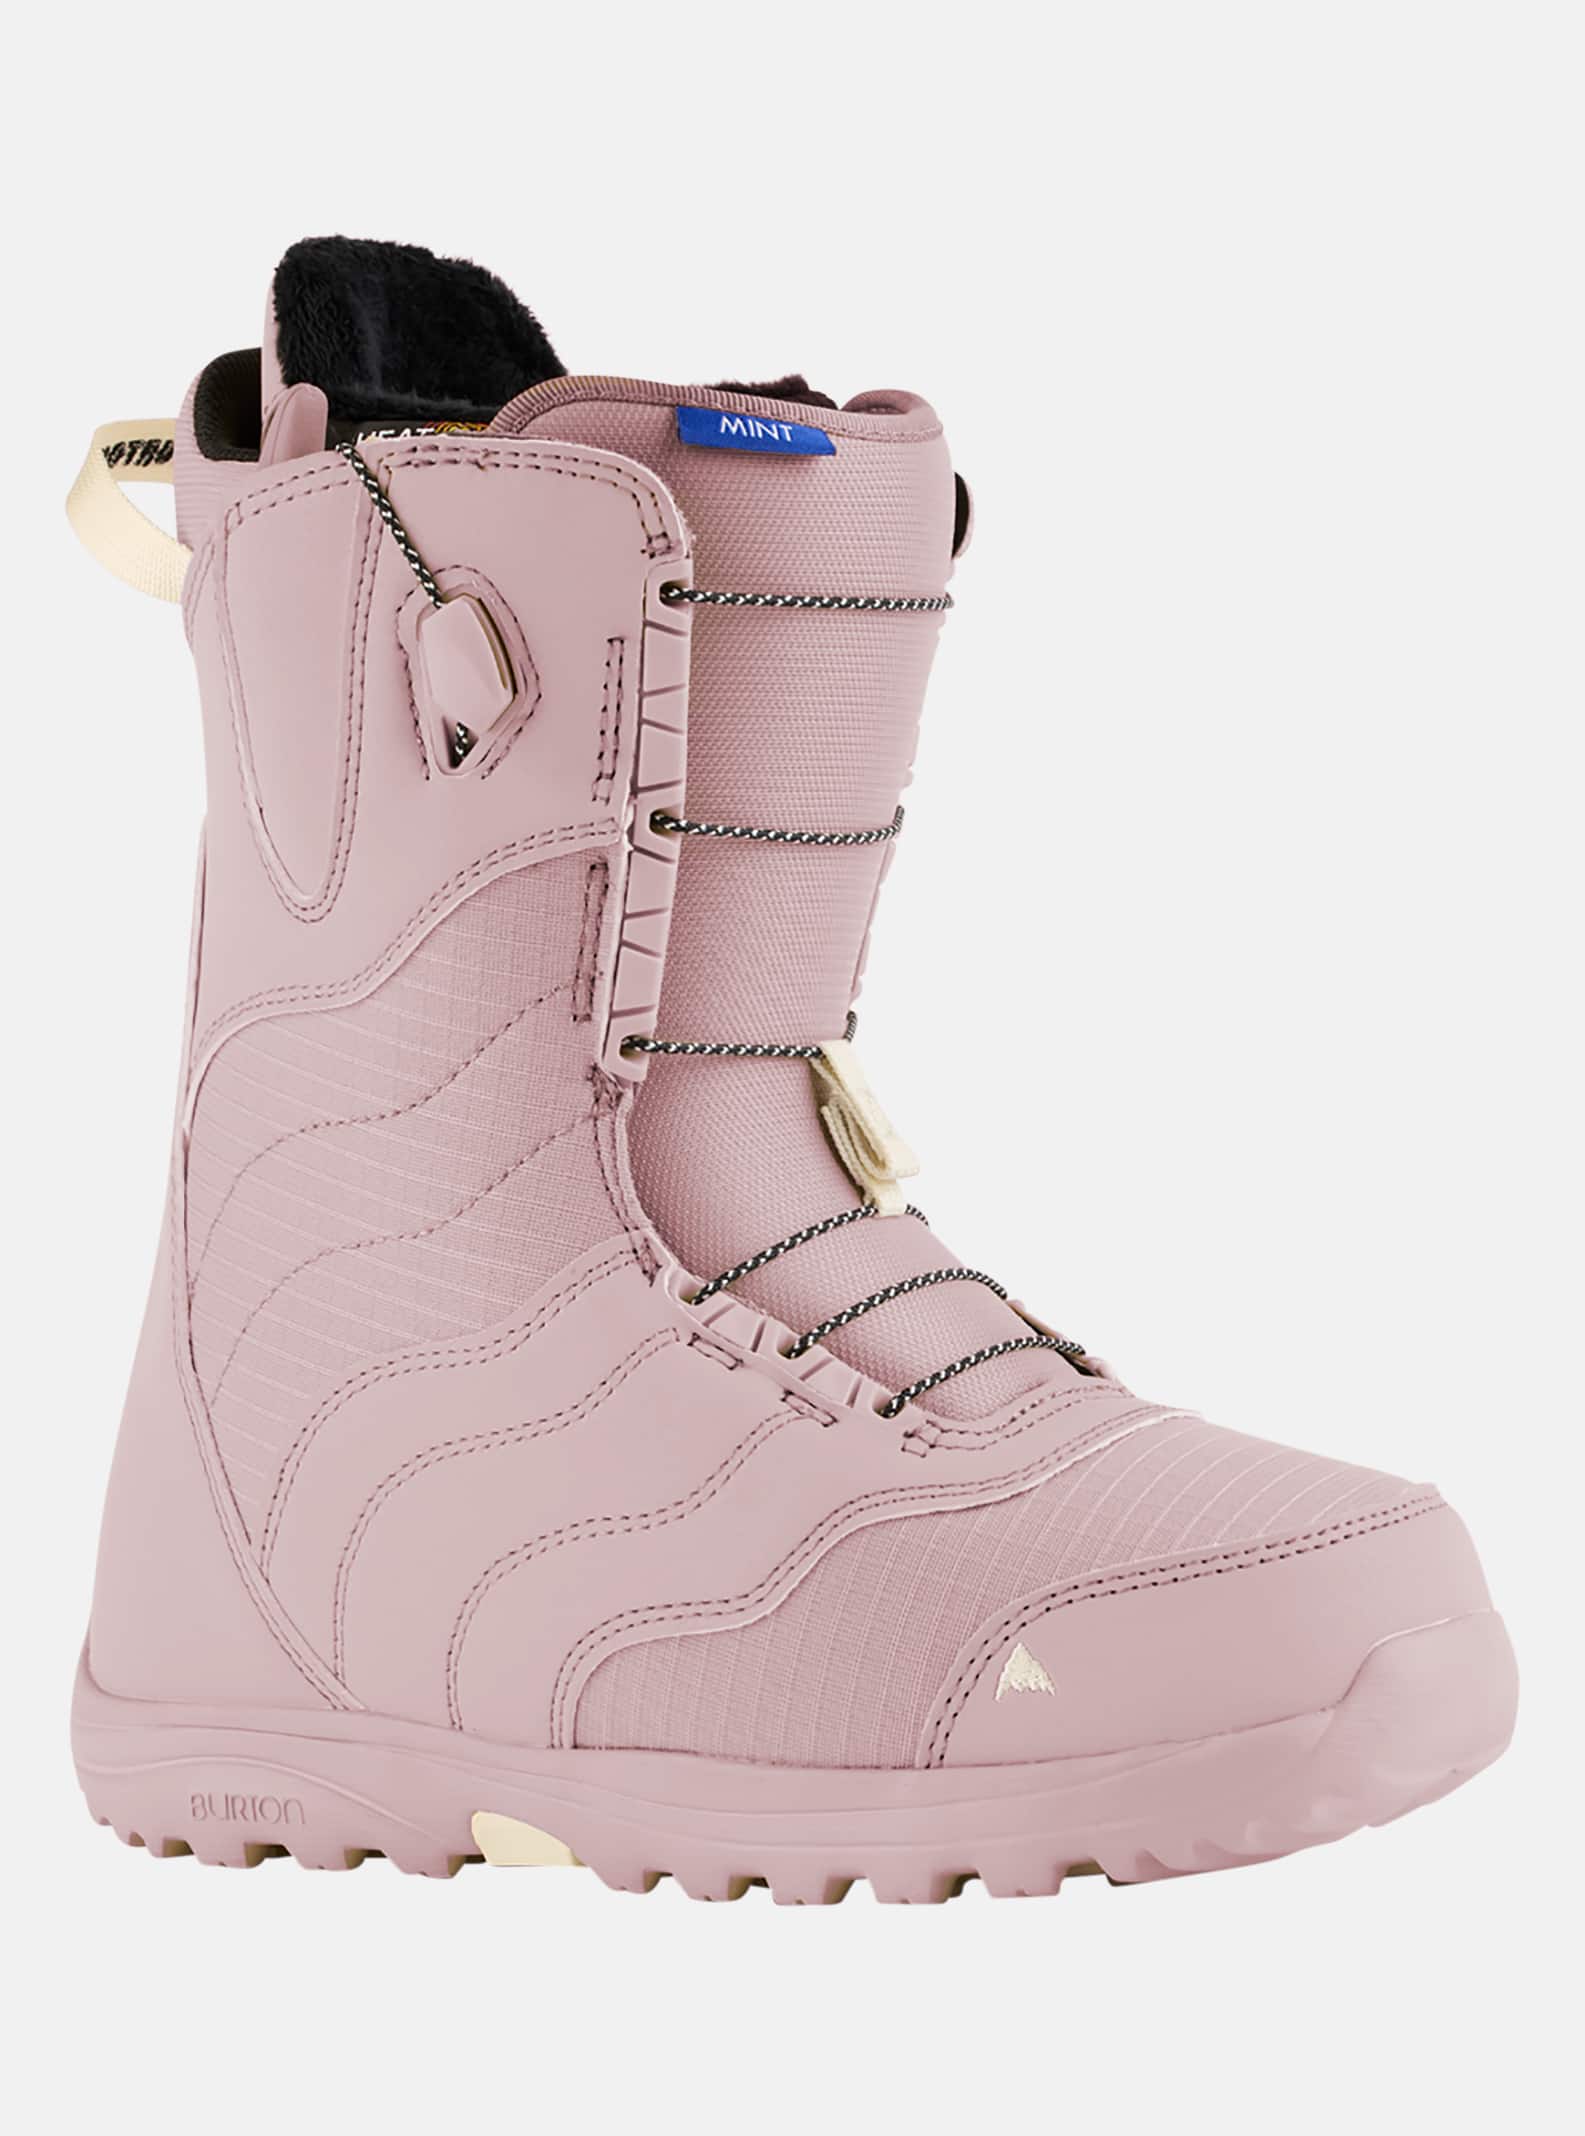 Burton - Boots de snowboard Mint femme, Elderberry, 5.5